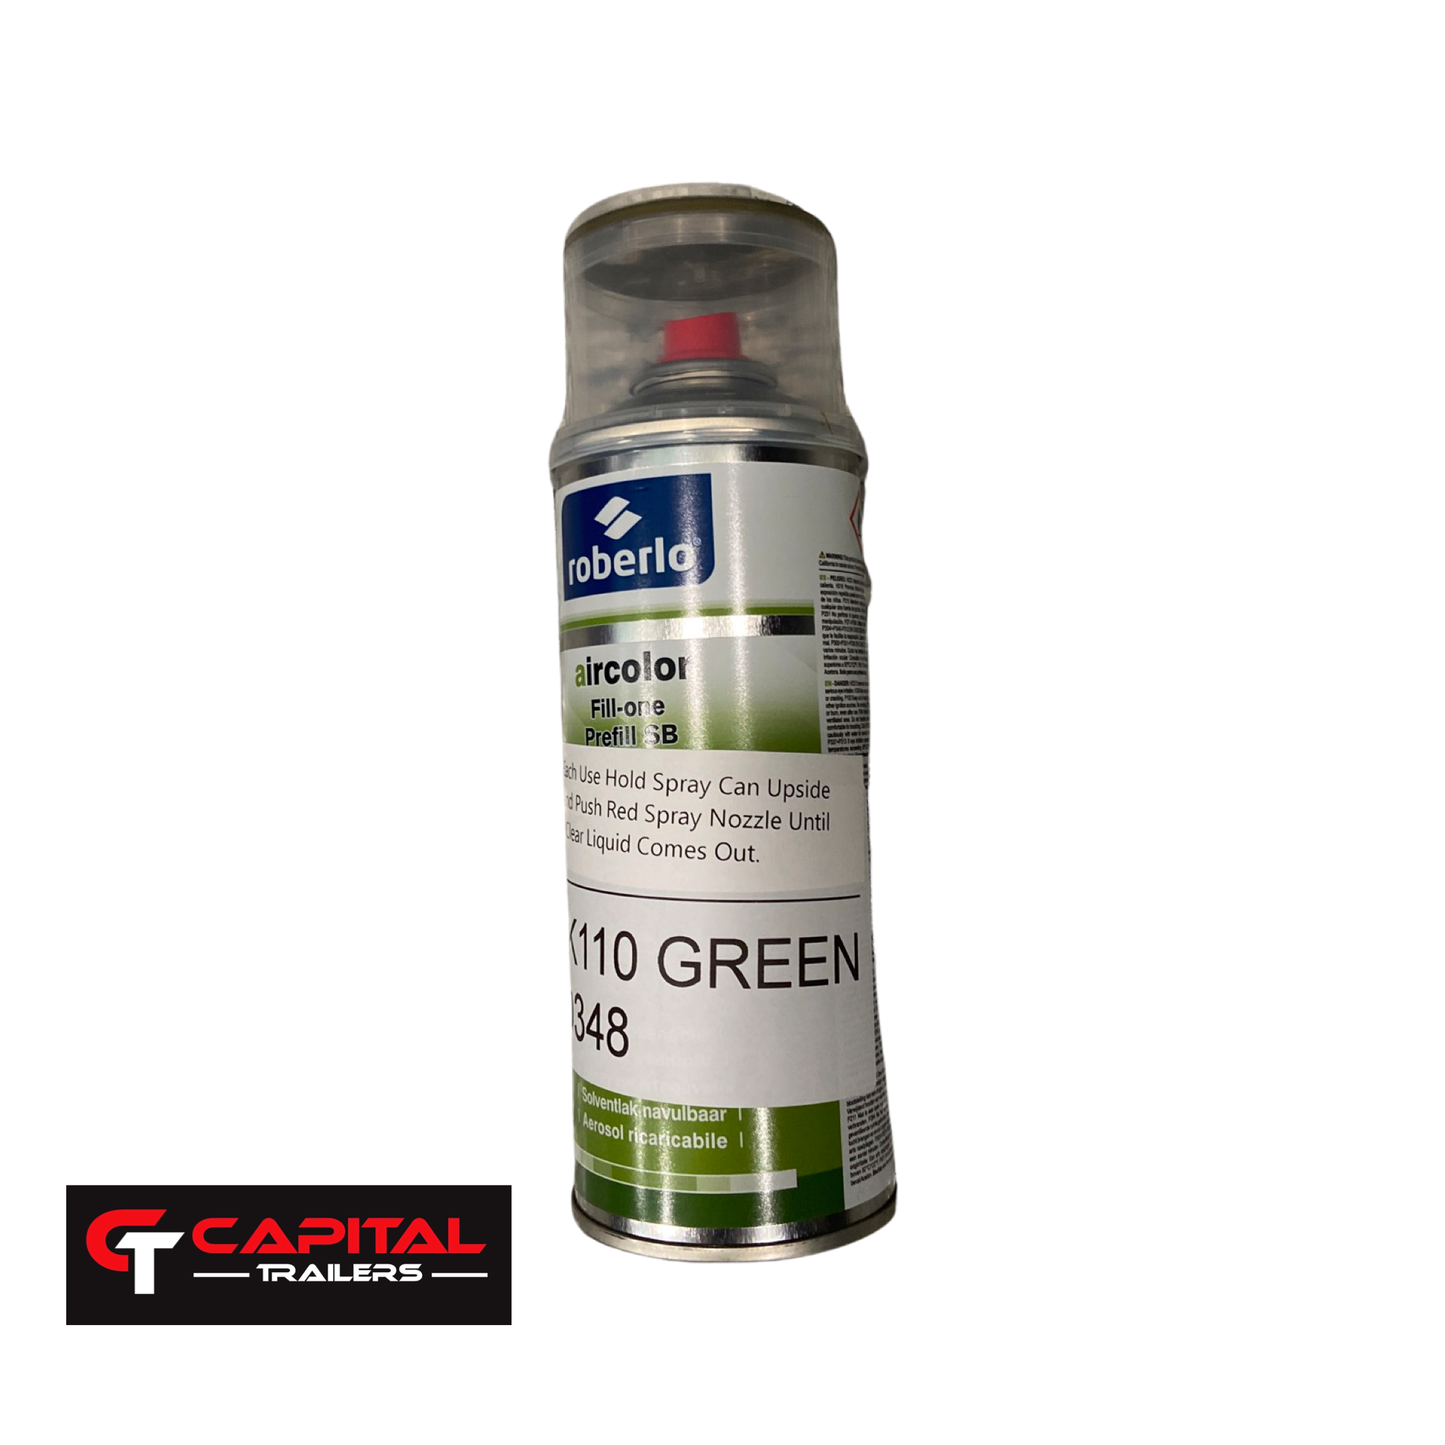 Ranger Green Spray Paint #920348